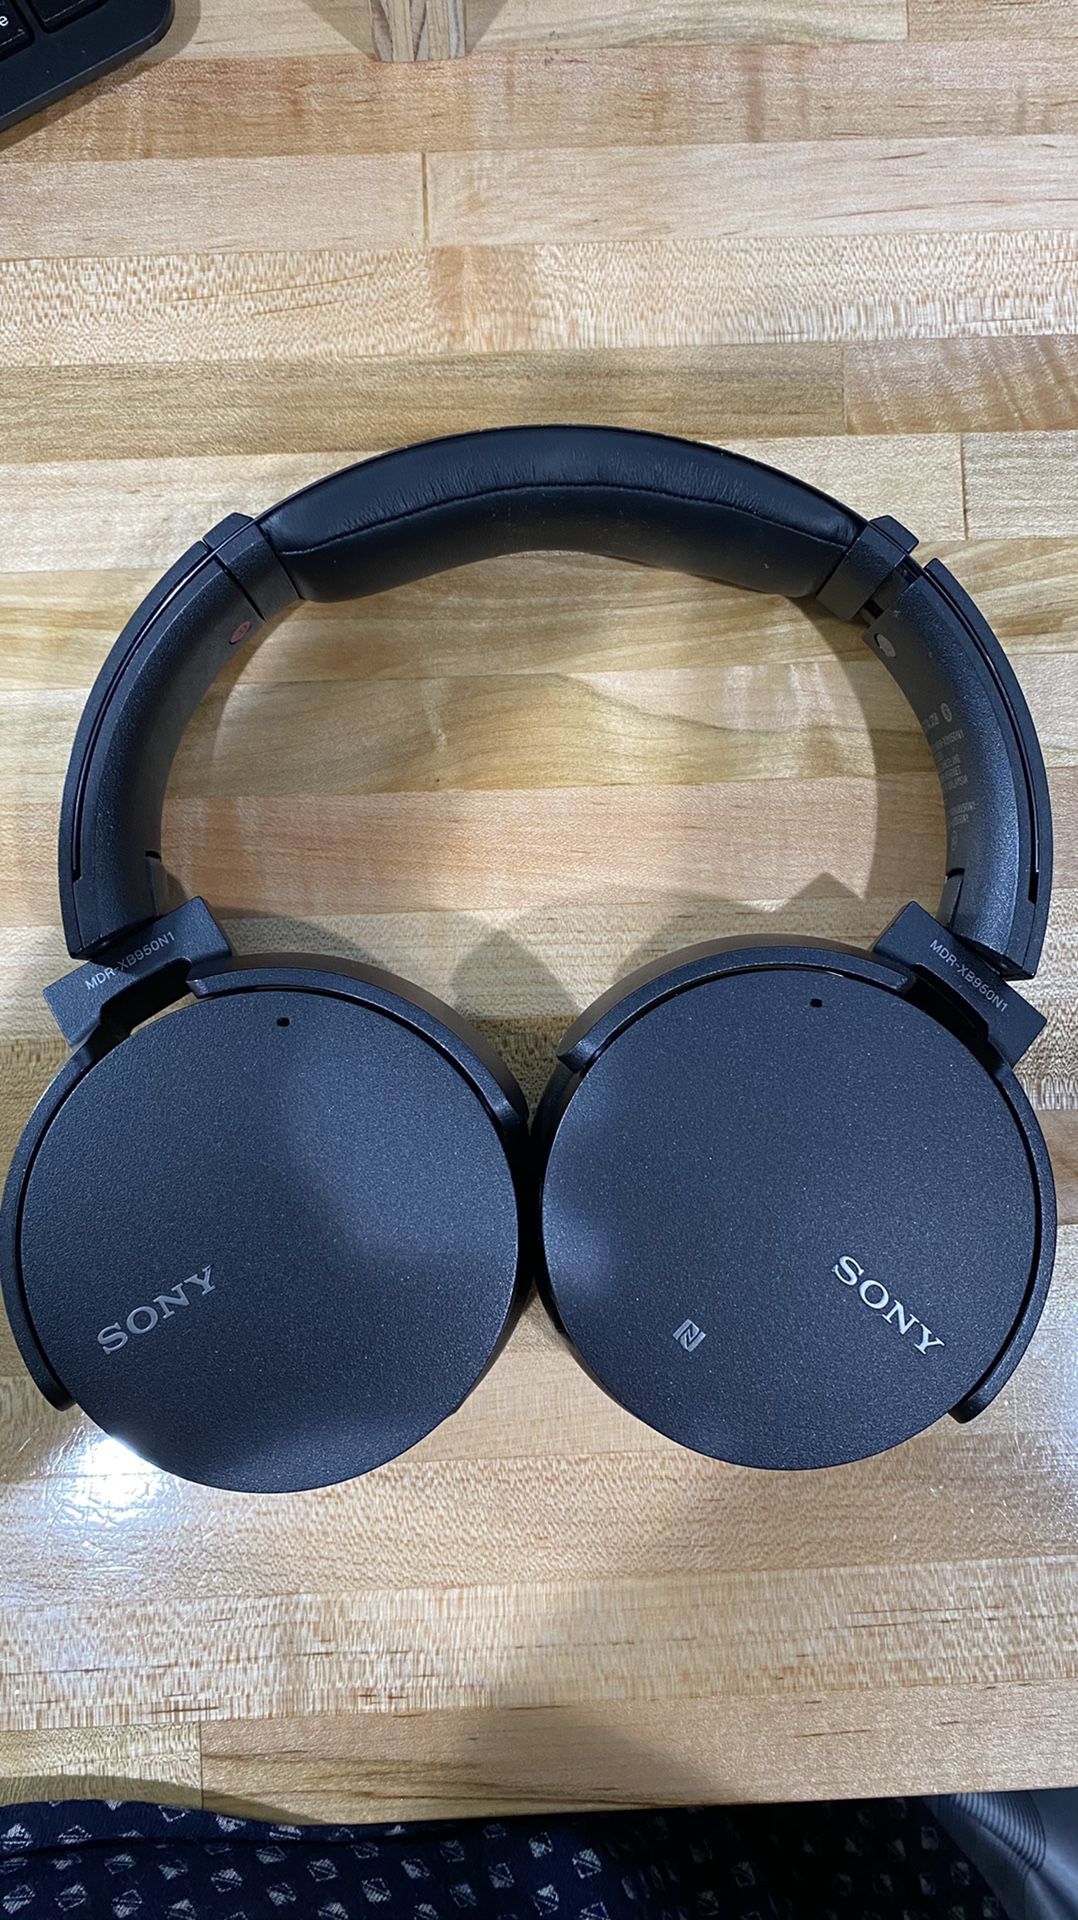 Head phones Sony XB950N1 Extra Bass Wireless Noise Canceling Headphones, Black